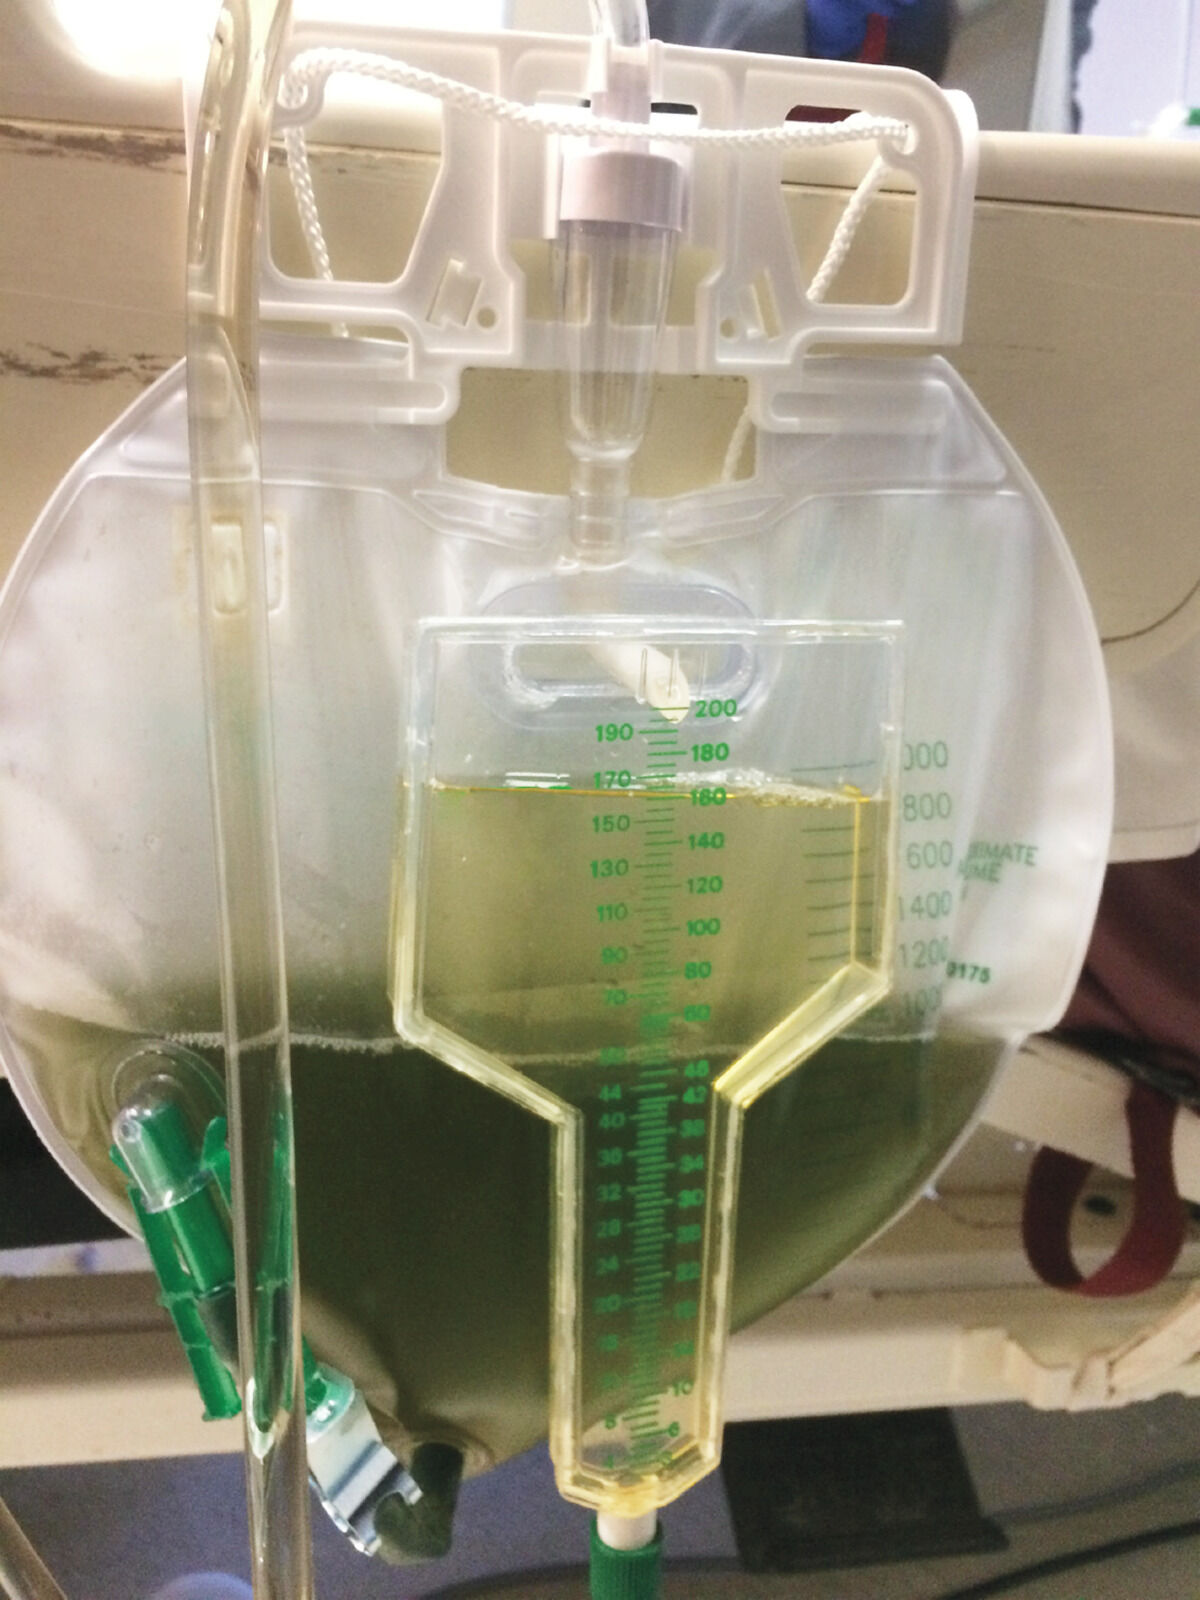 Rare case of green urine reported in NEJM